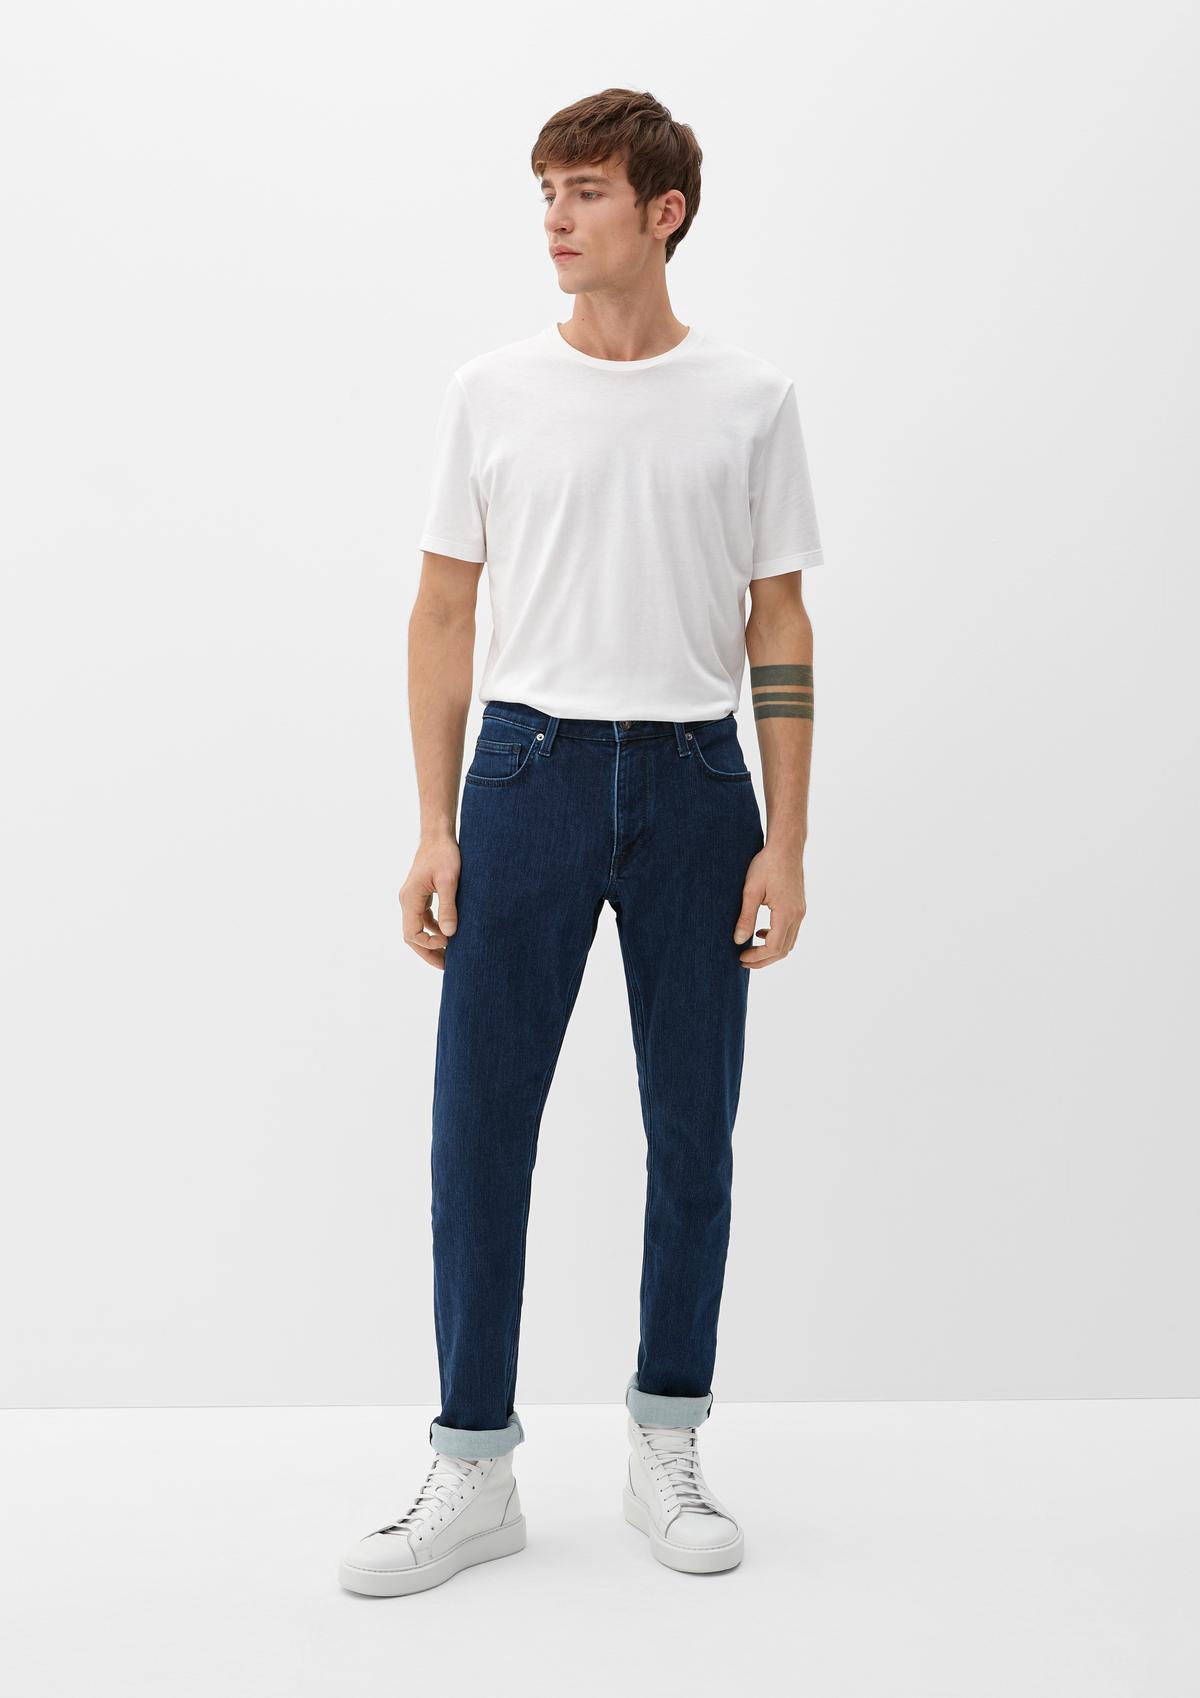 s.Oliver Slim fit: jeans with a subtle garment wash